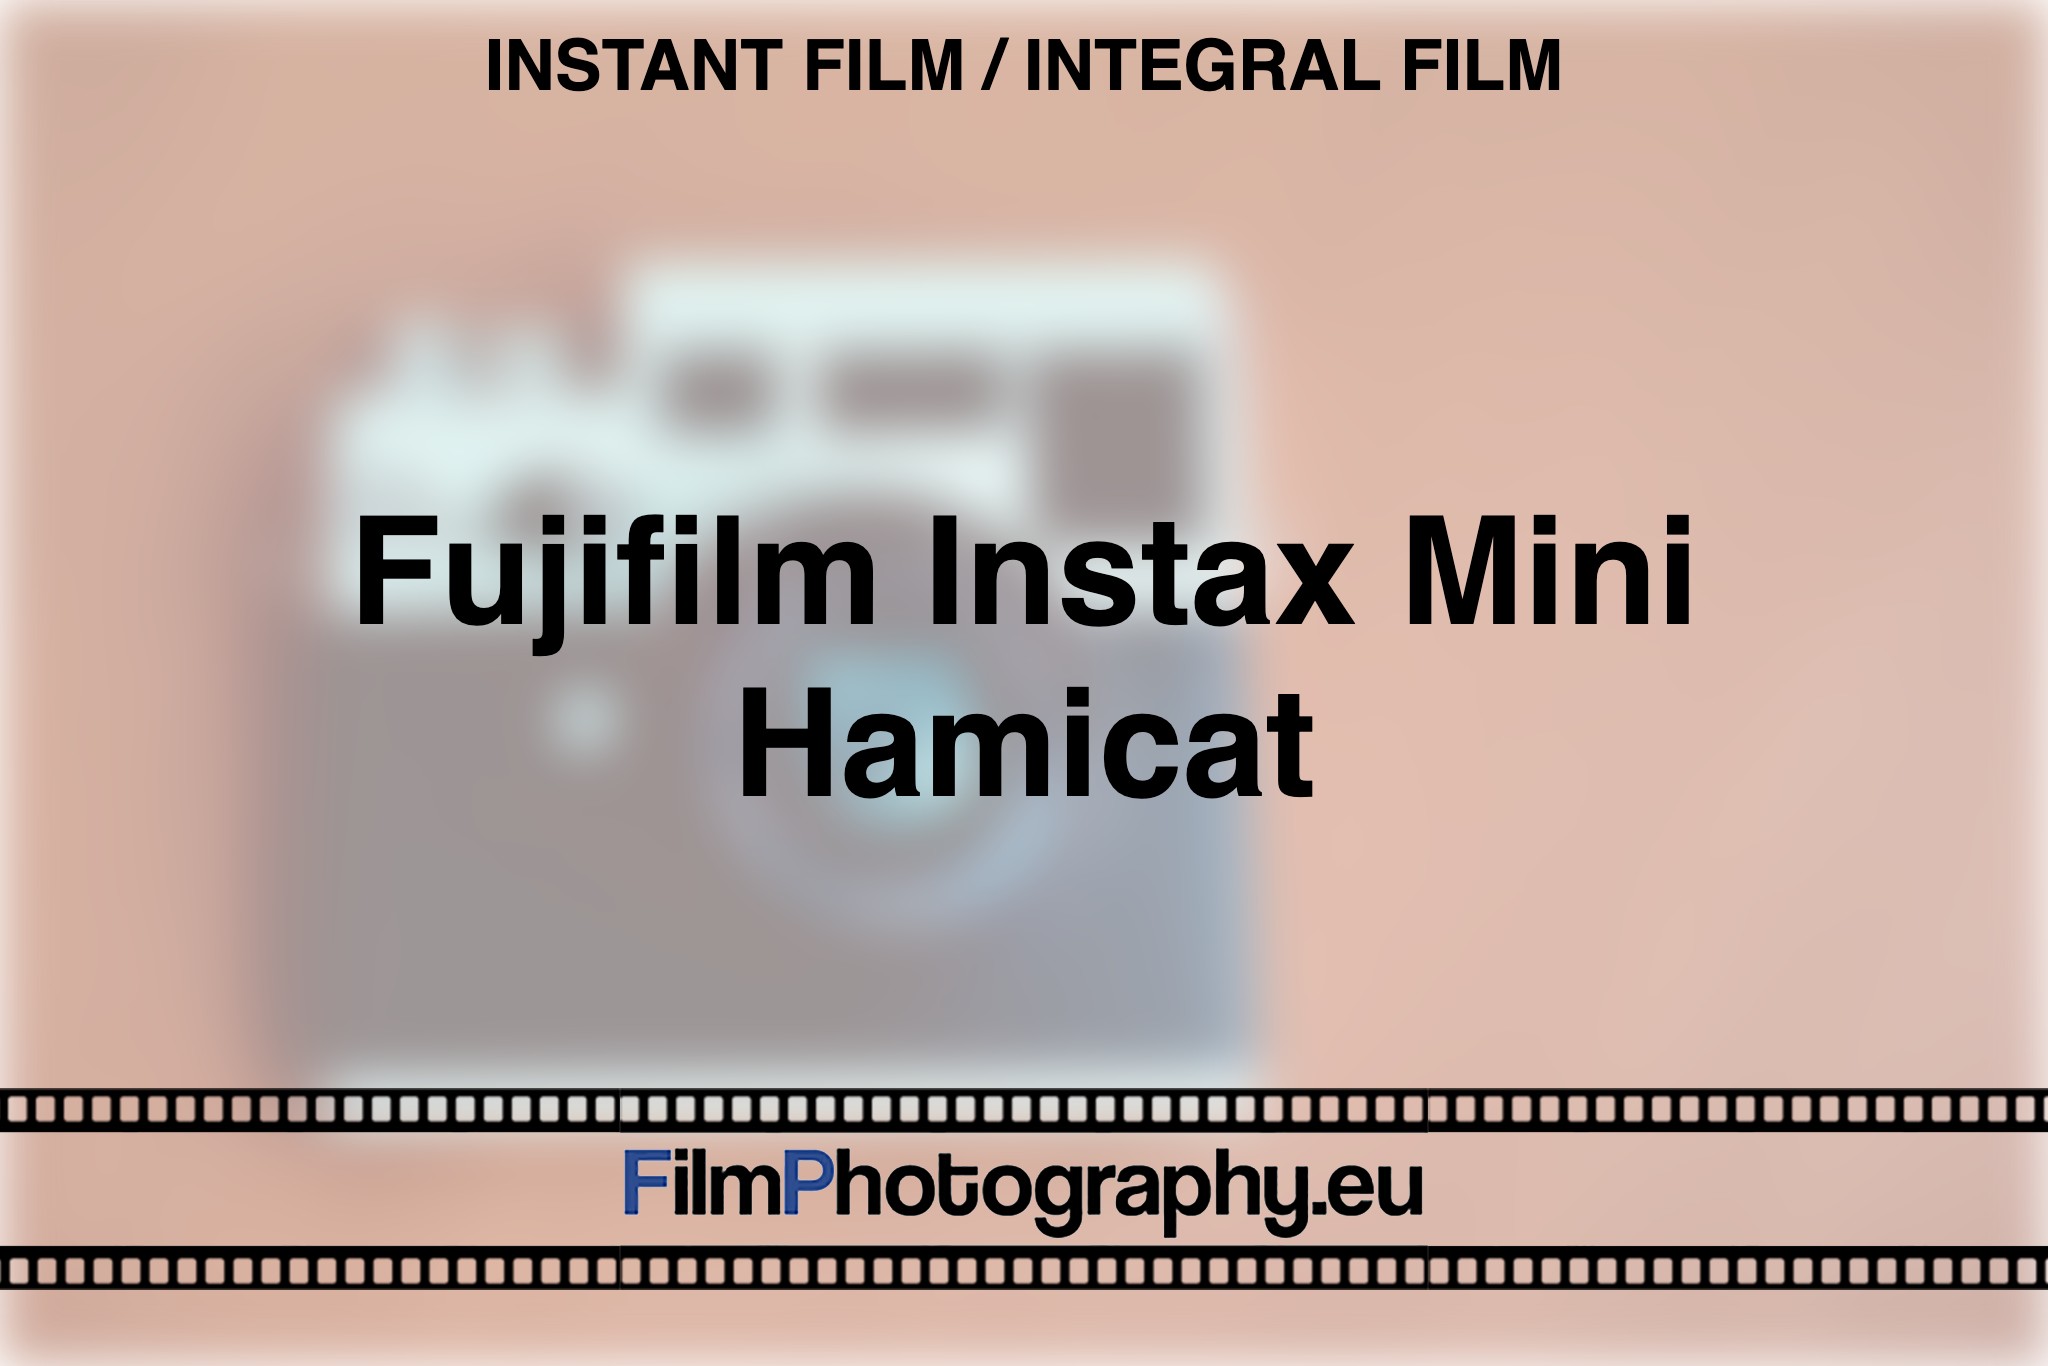 fujifilm-instax-mini-hamicat-instant-film-integral-film-bnv